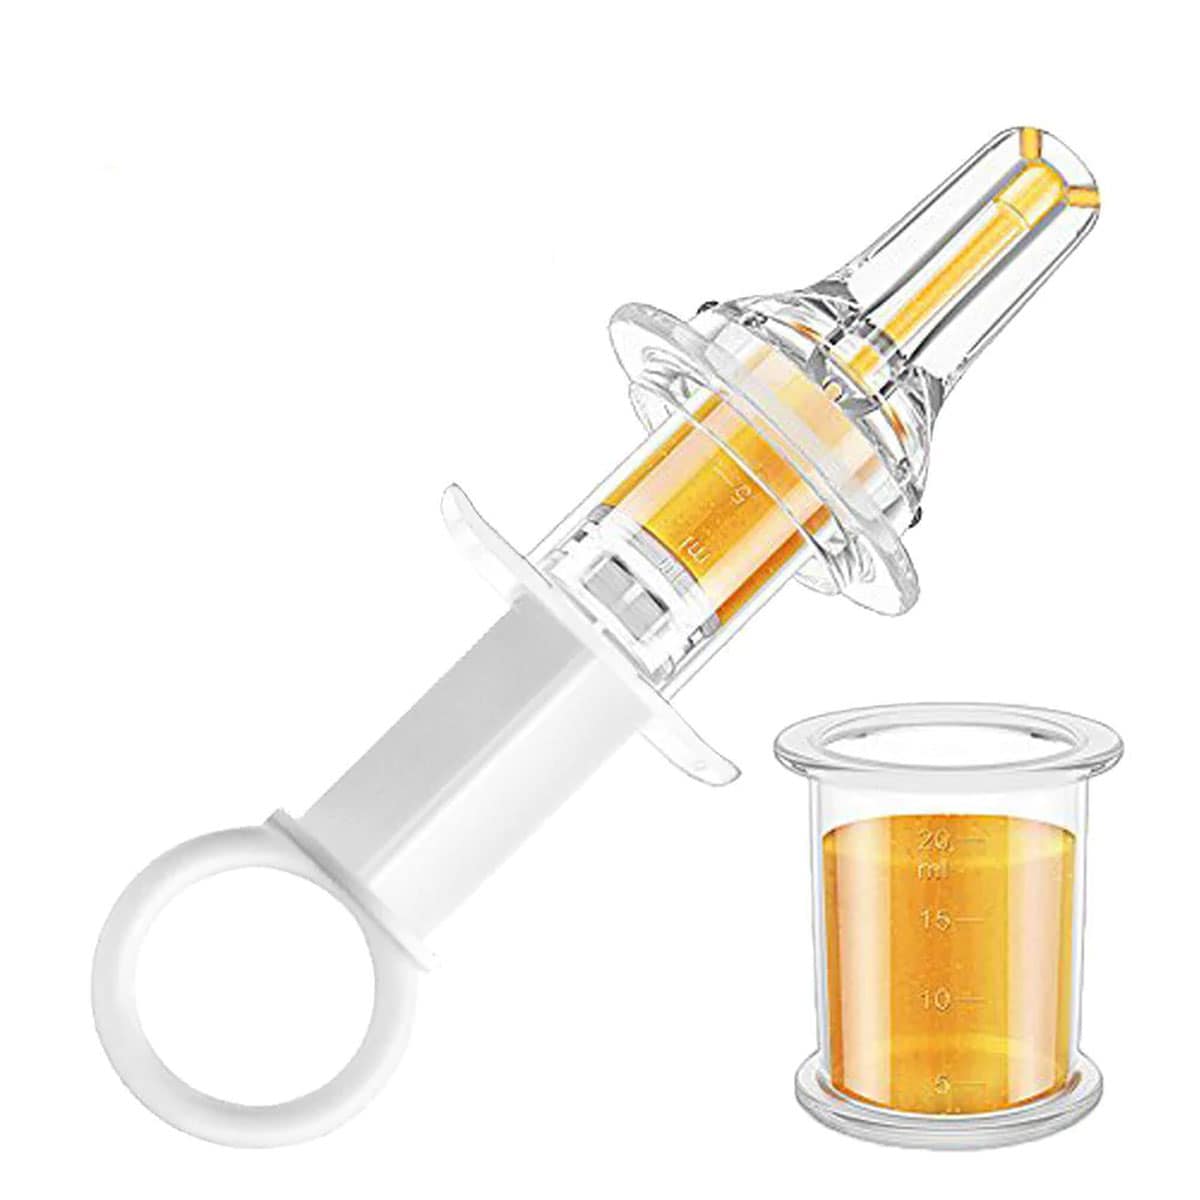 Haakaa Baby Oral Medicine Syringe 1 Pack